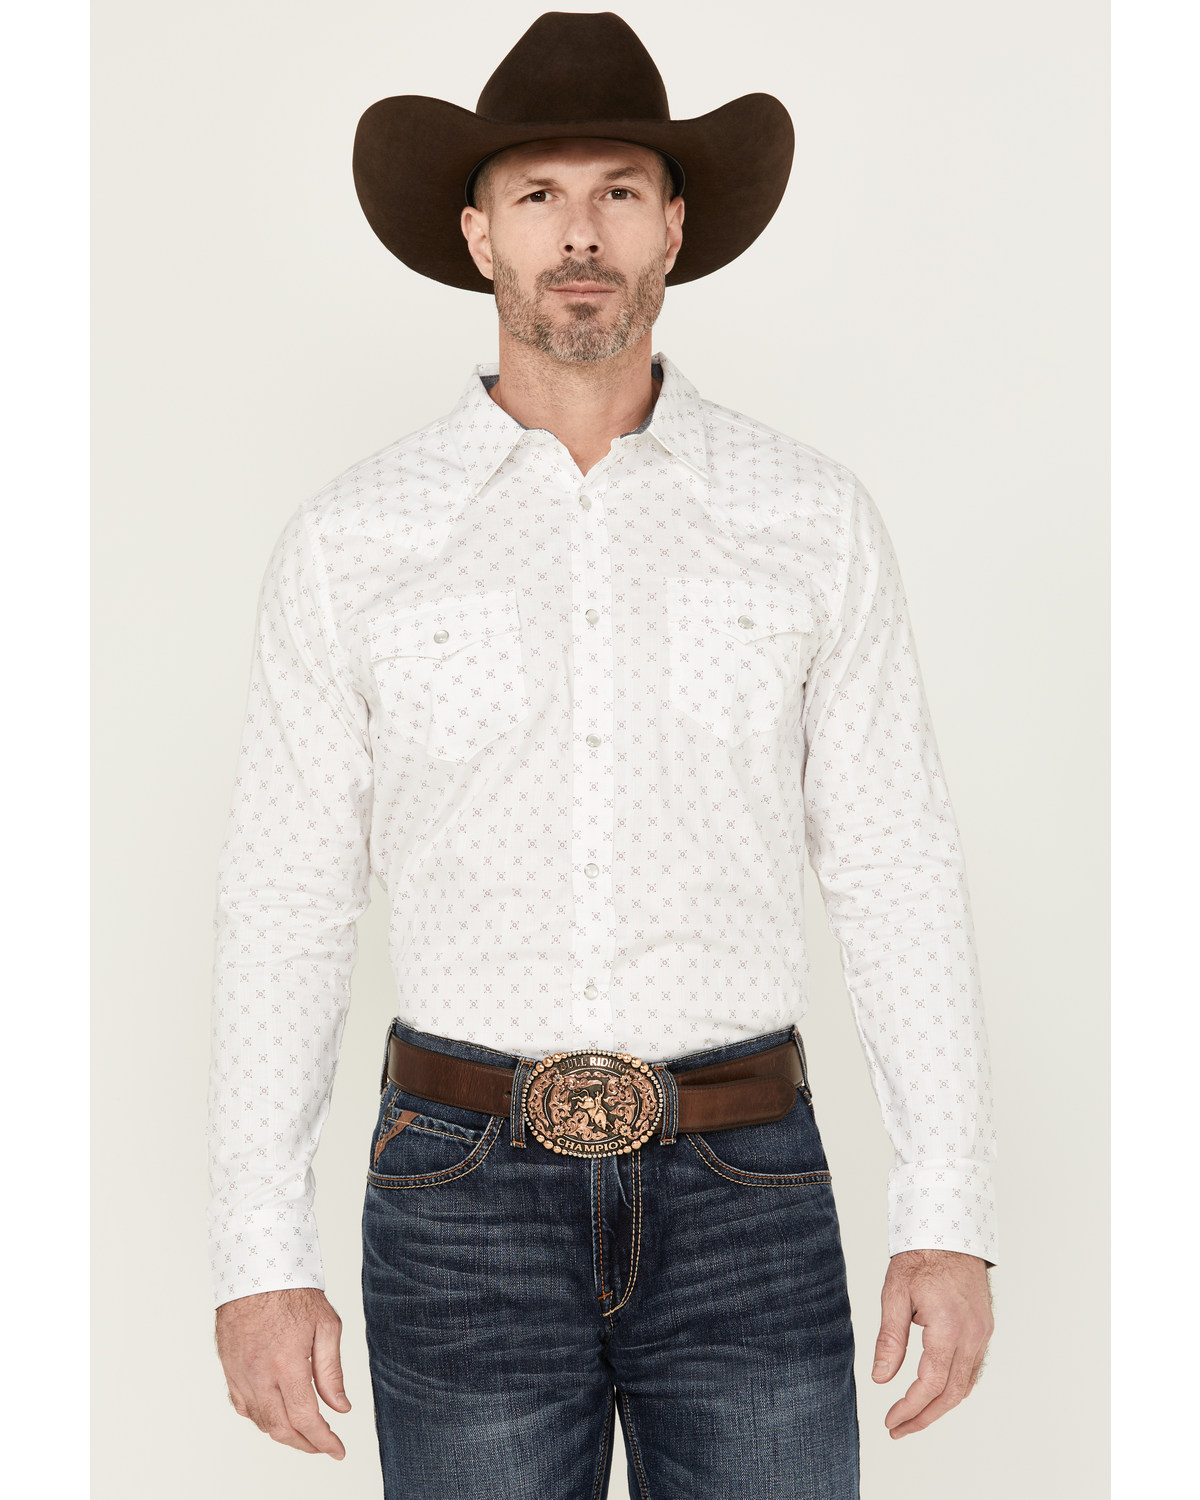 Cody James Men's North Star Jacquard Geo Print Long Sleeve Pearl Snap Western Shirt